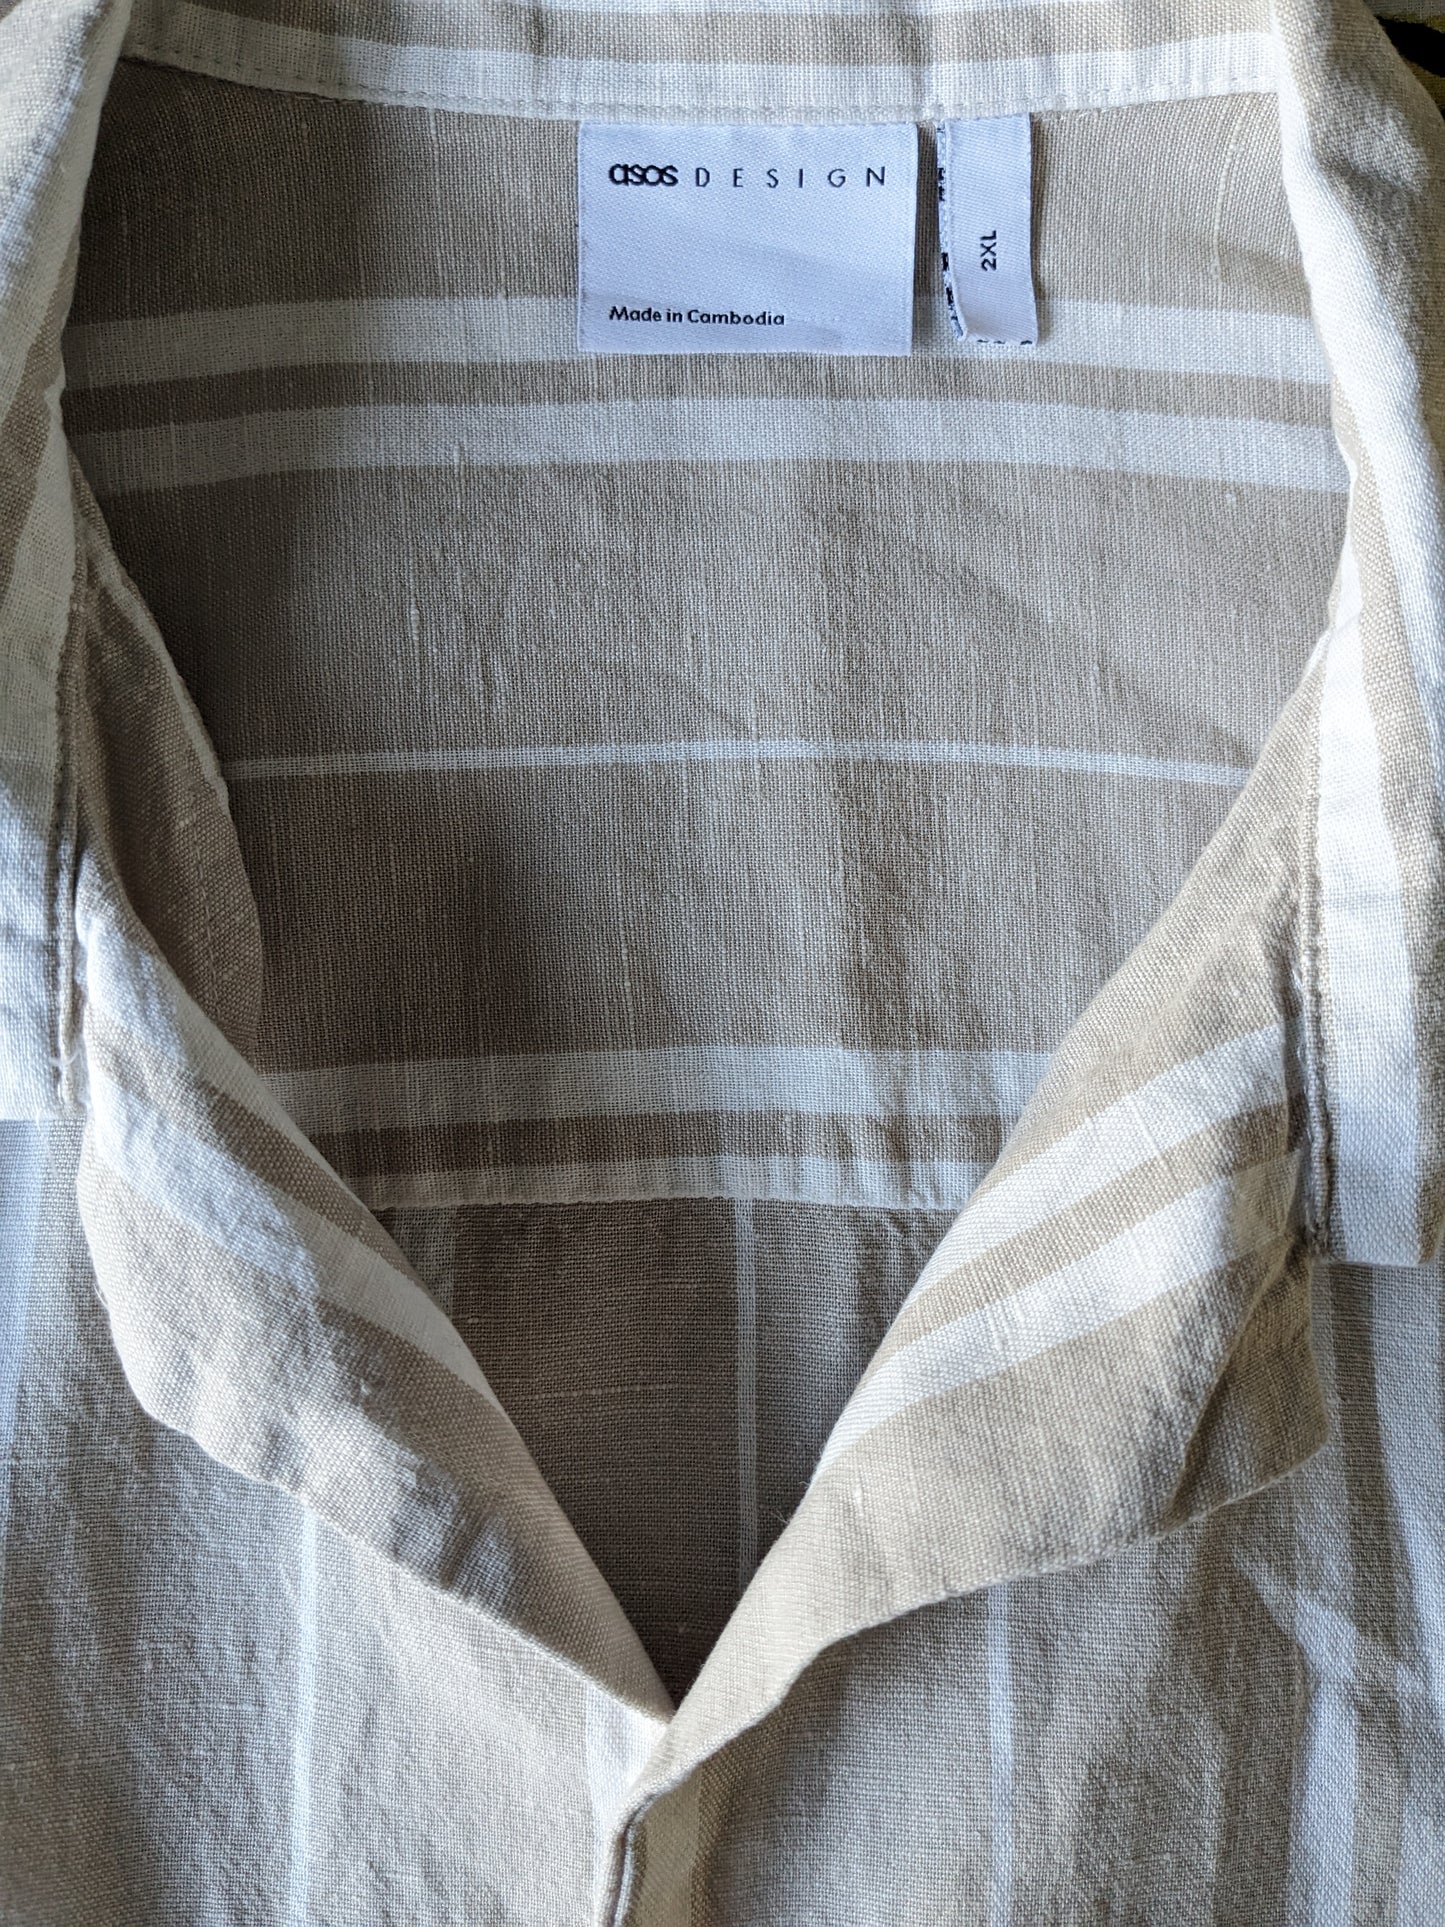 Asos Diseño de camisa de lino Manga corta con 1 nudo. Beige White Striped. Tamaño 2xl / xxl. 53% de lino.